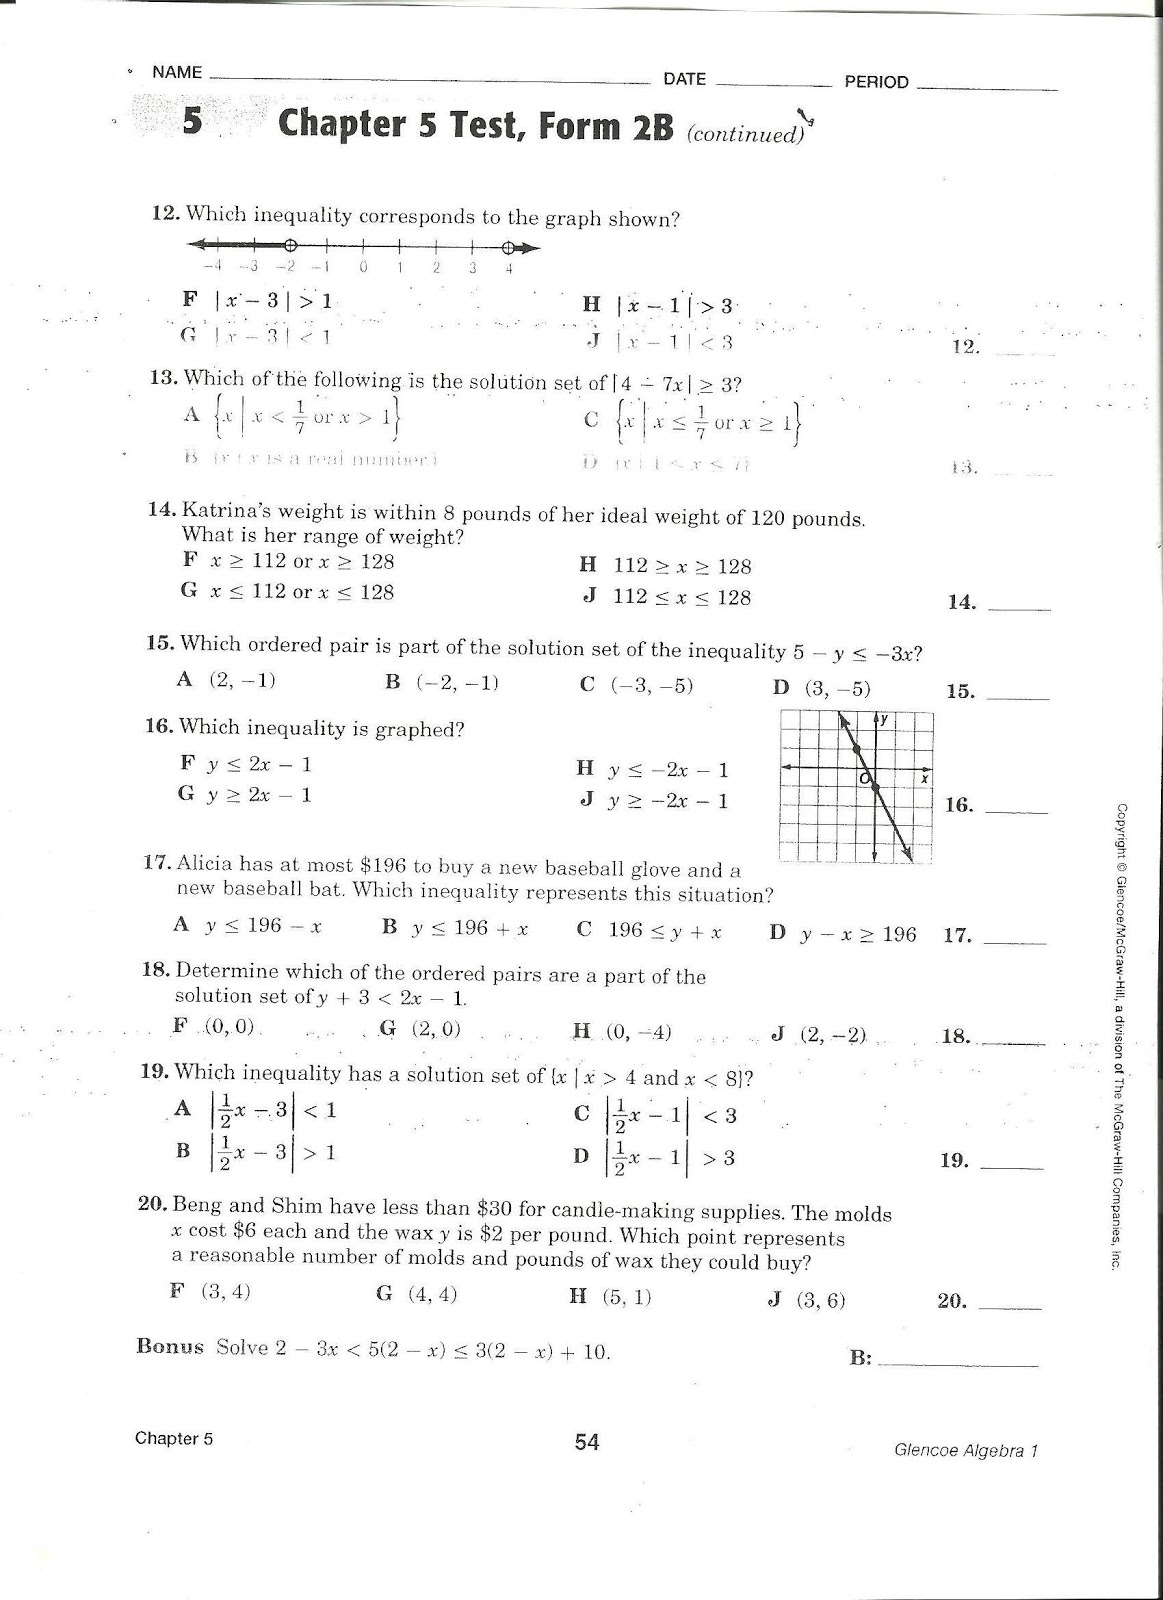 Coach Gober S Algebra Class Chapter 5 Test Form 2b Assigned January 16